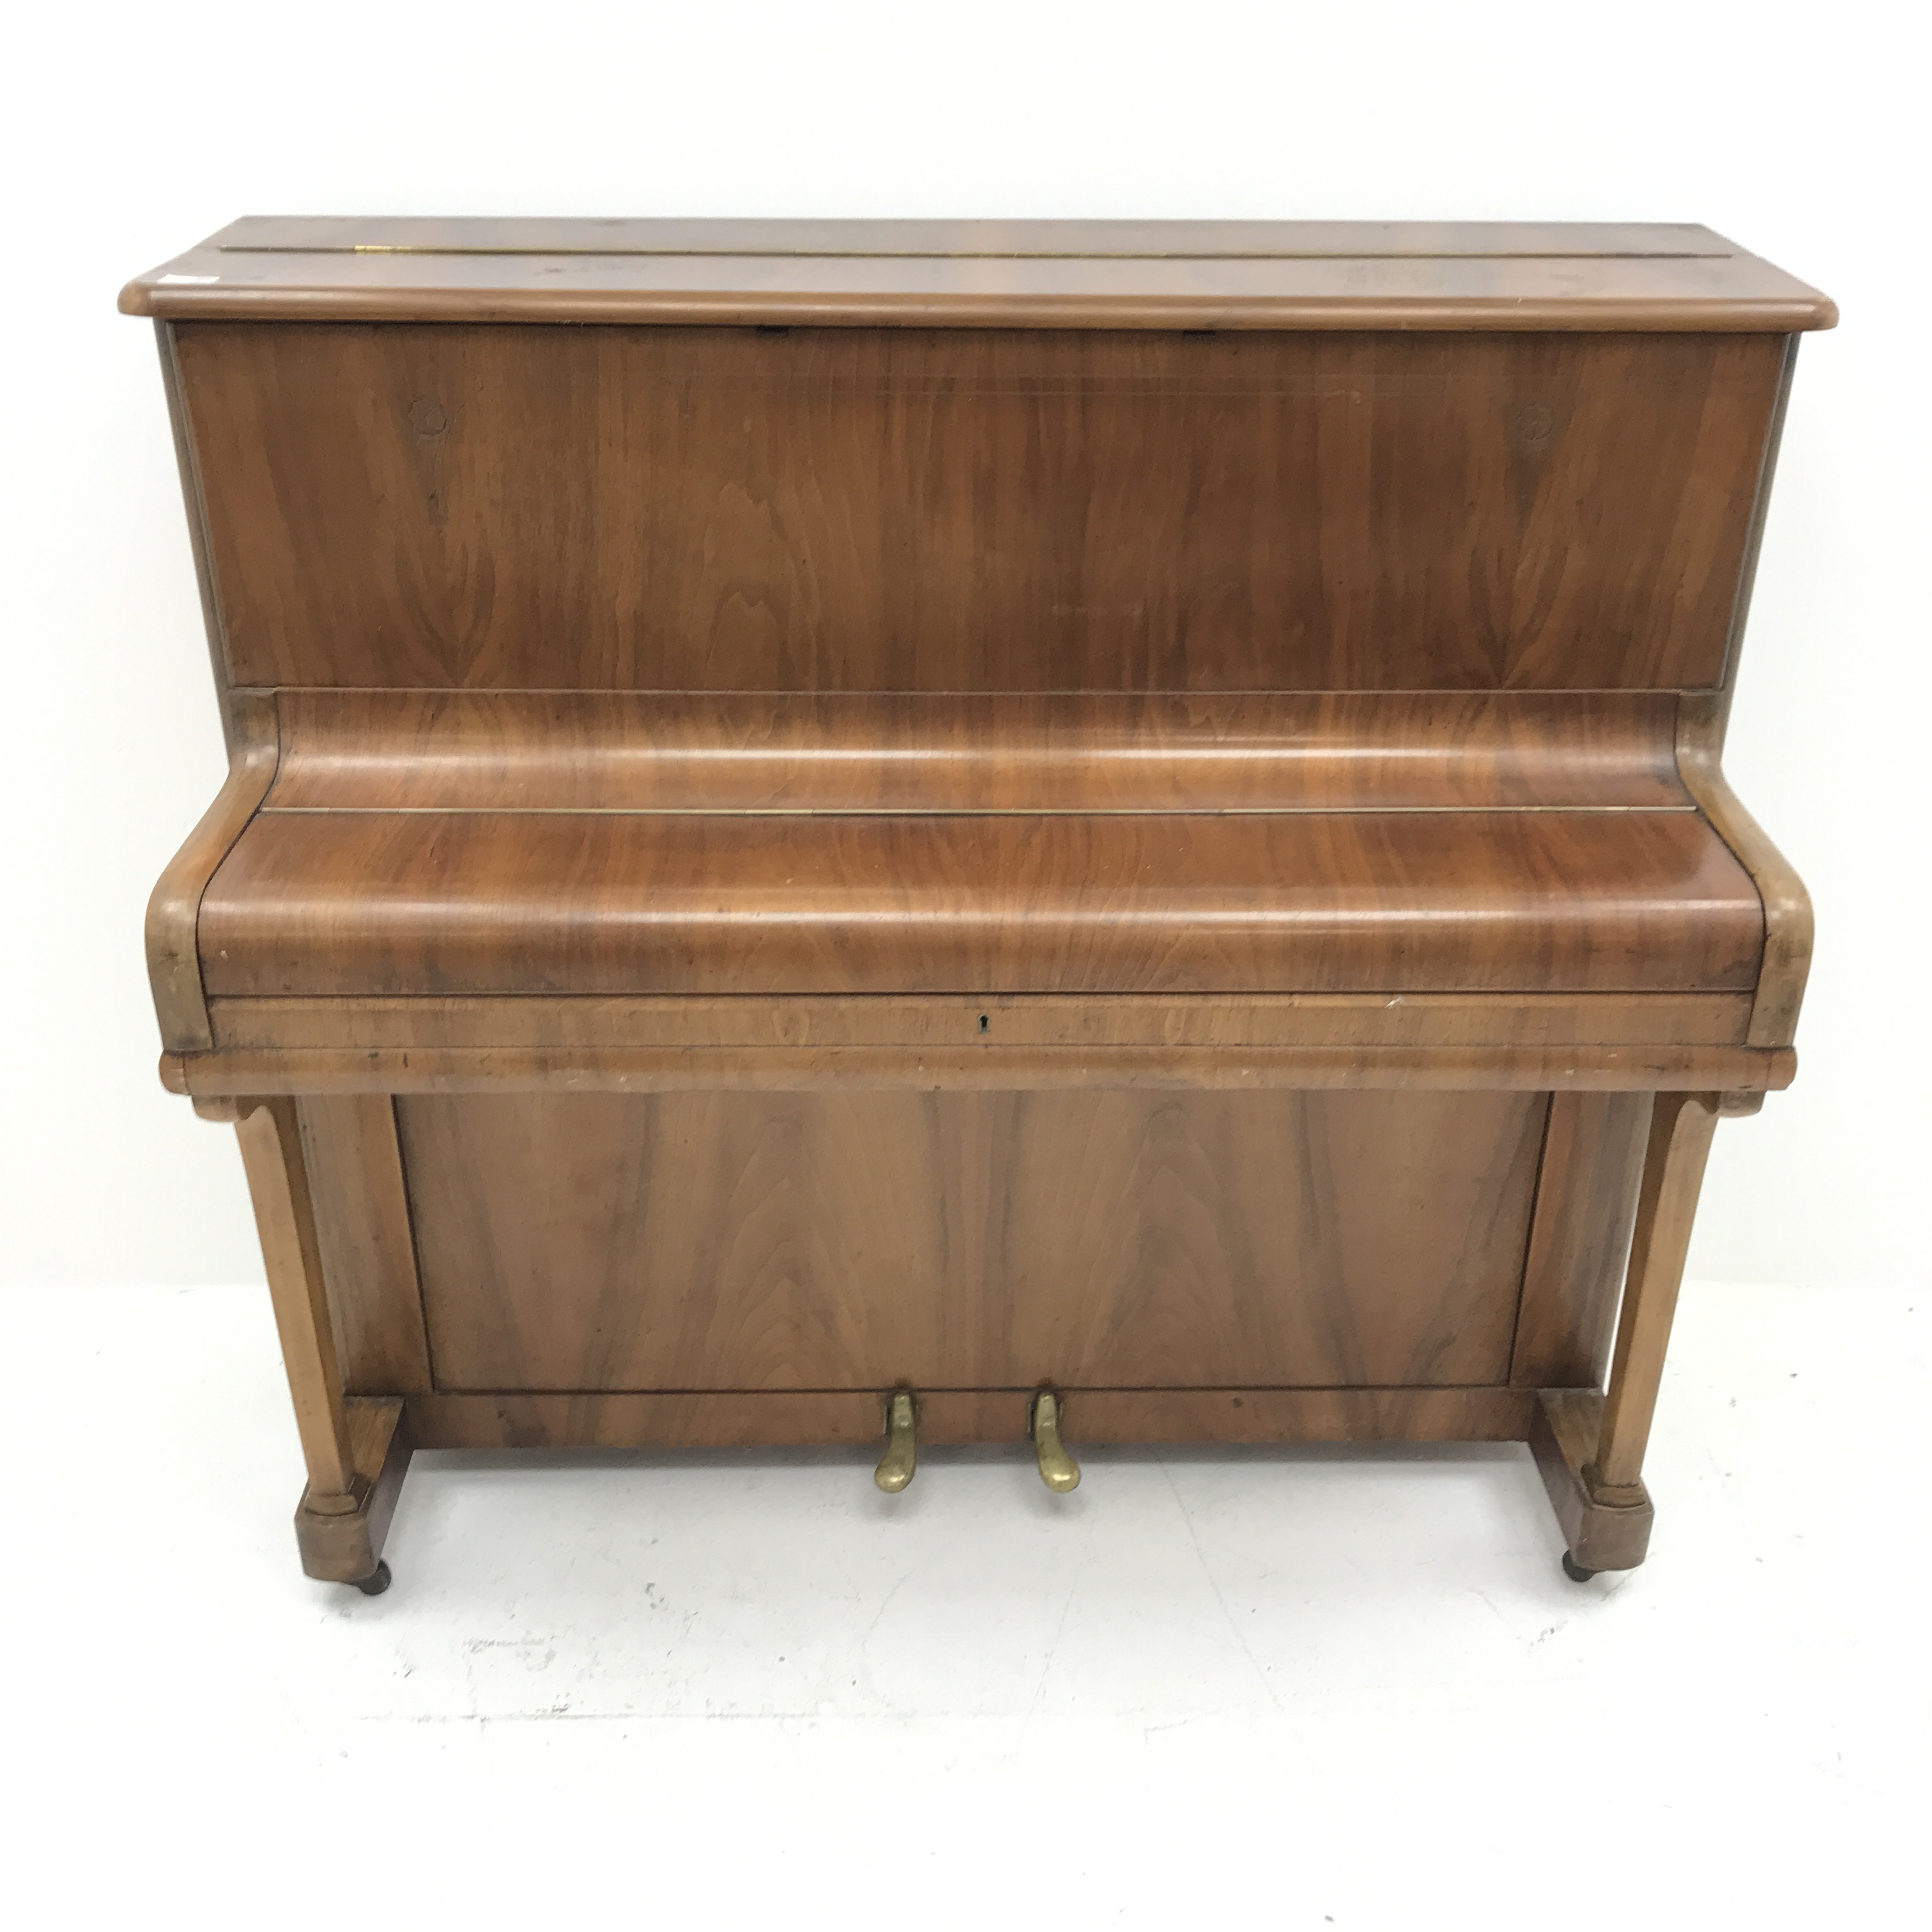 Godfrey walnut cased overstrung upright piano, W124cm, H113cm - Image 7 of 10